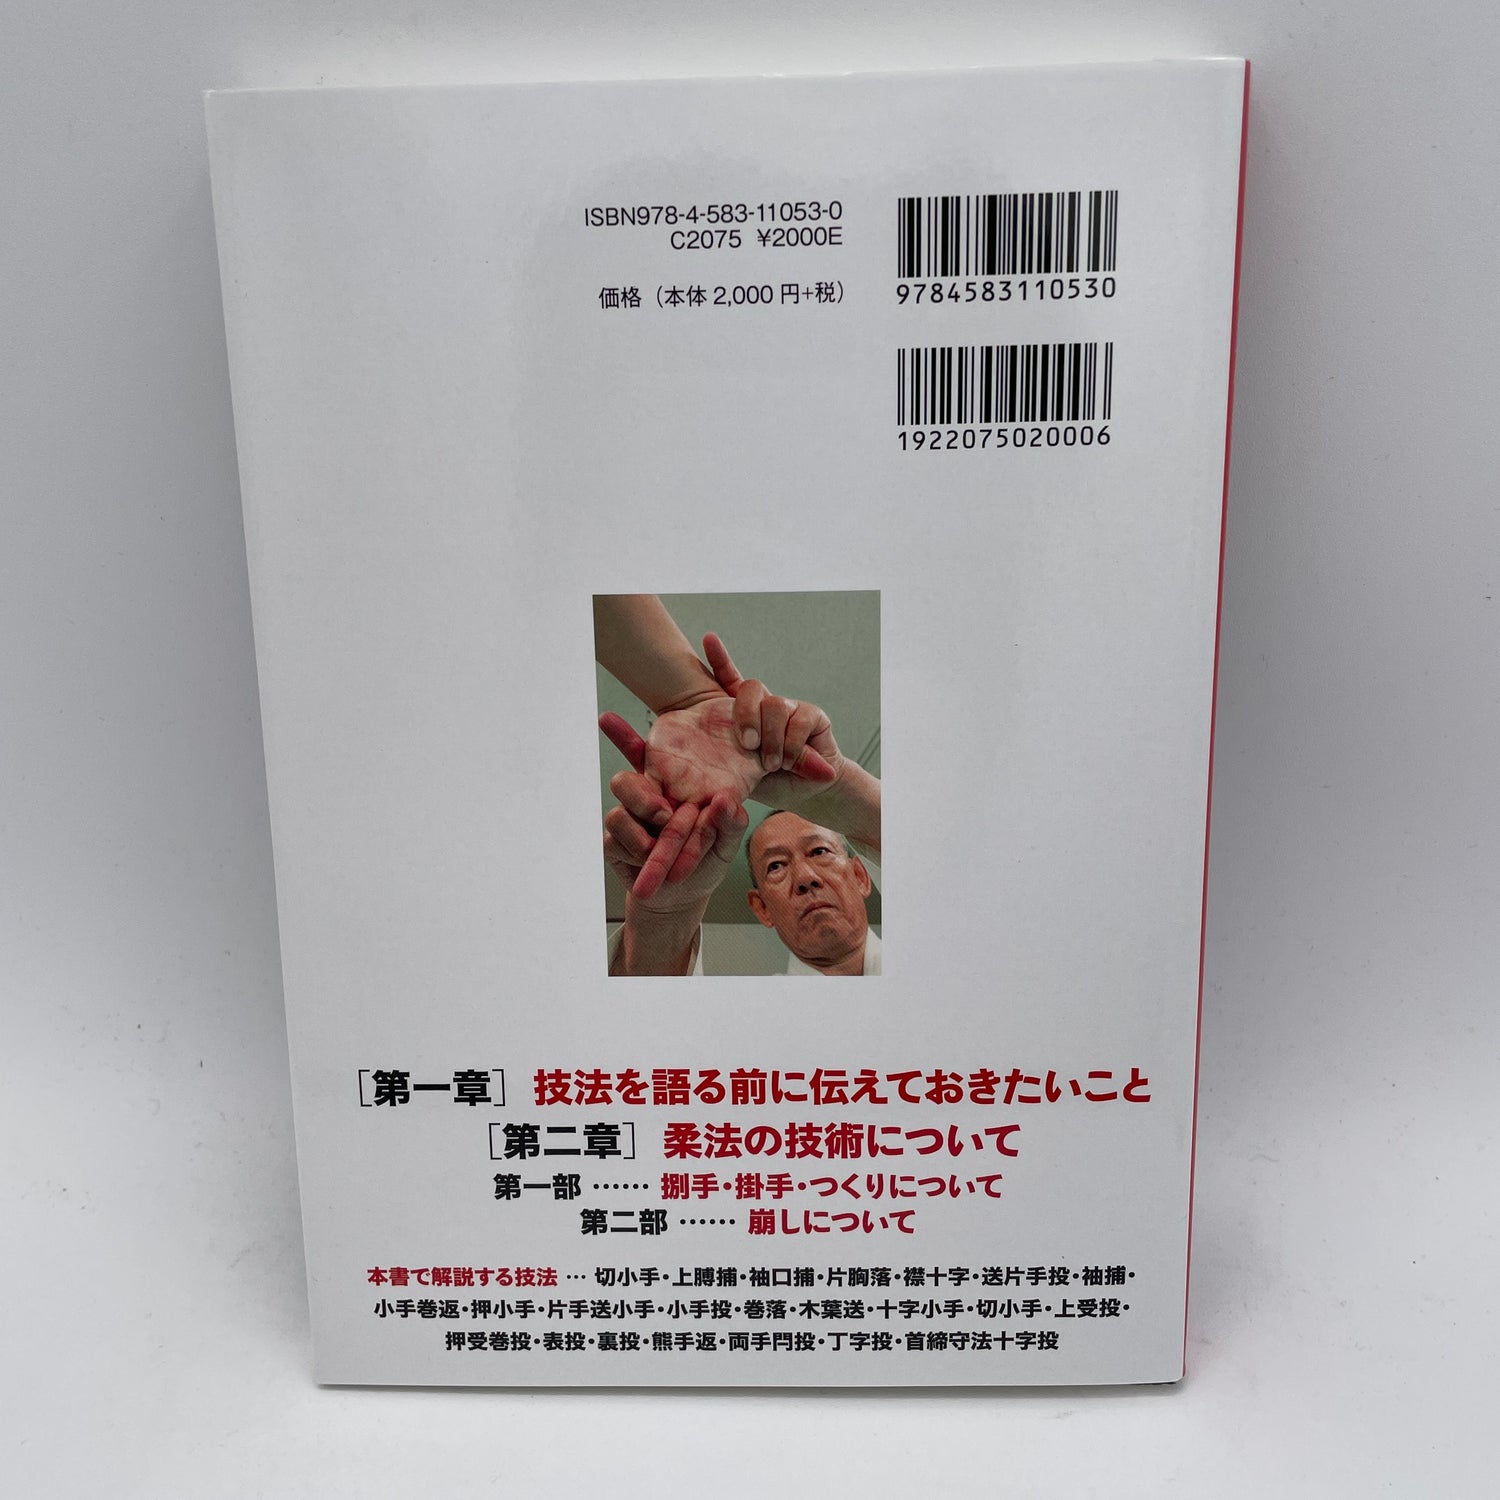 Shorinji Kempo Juho Tips Book & DVD